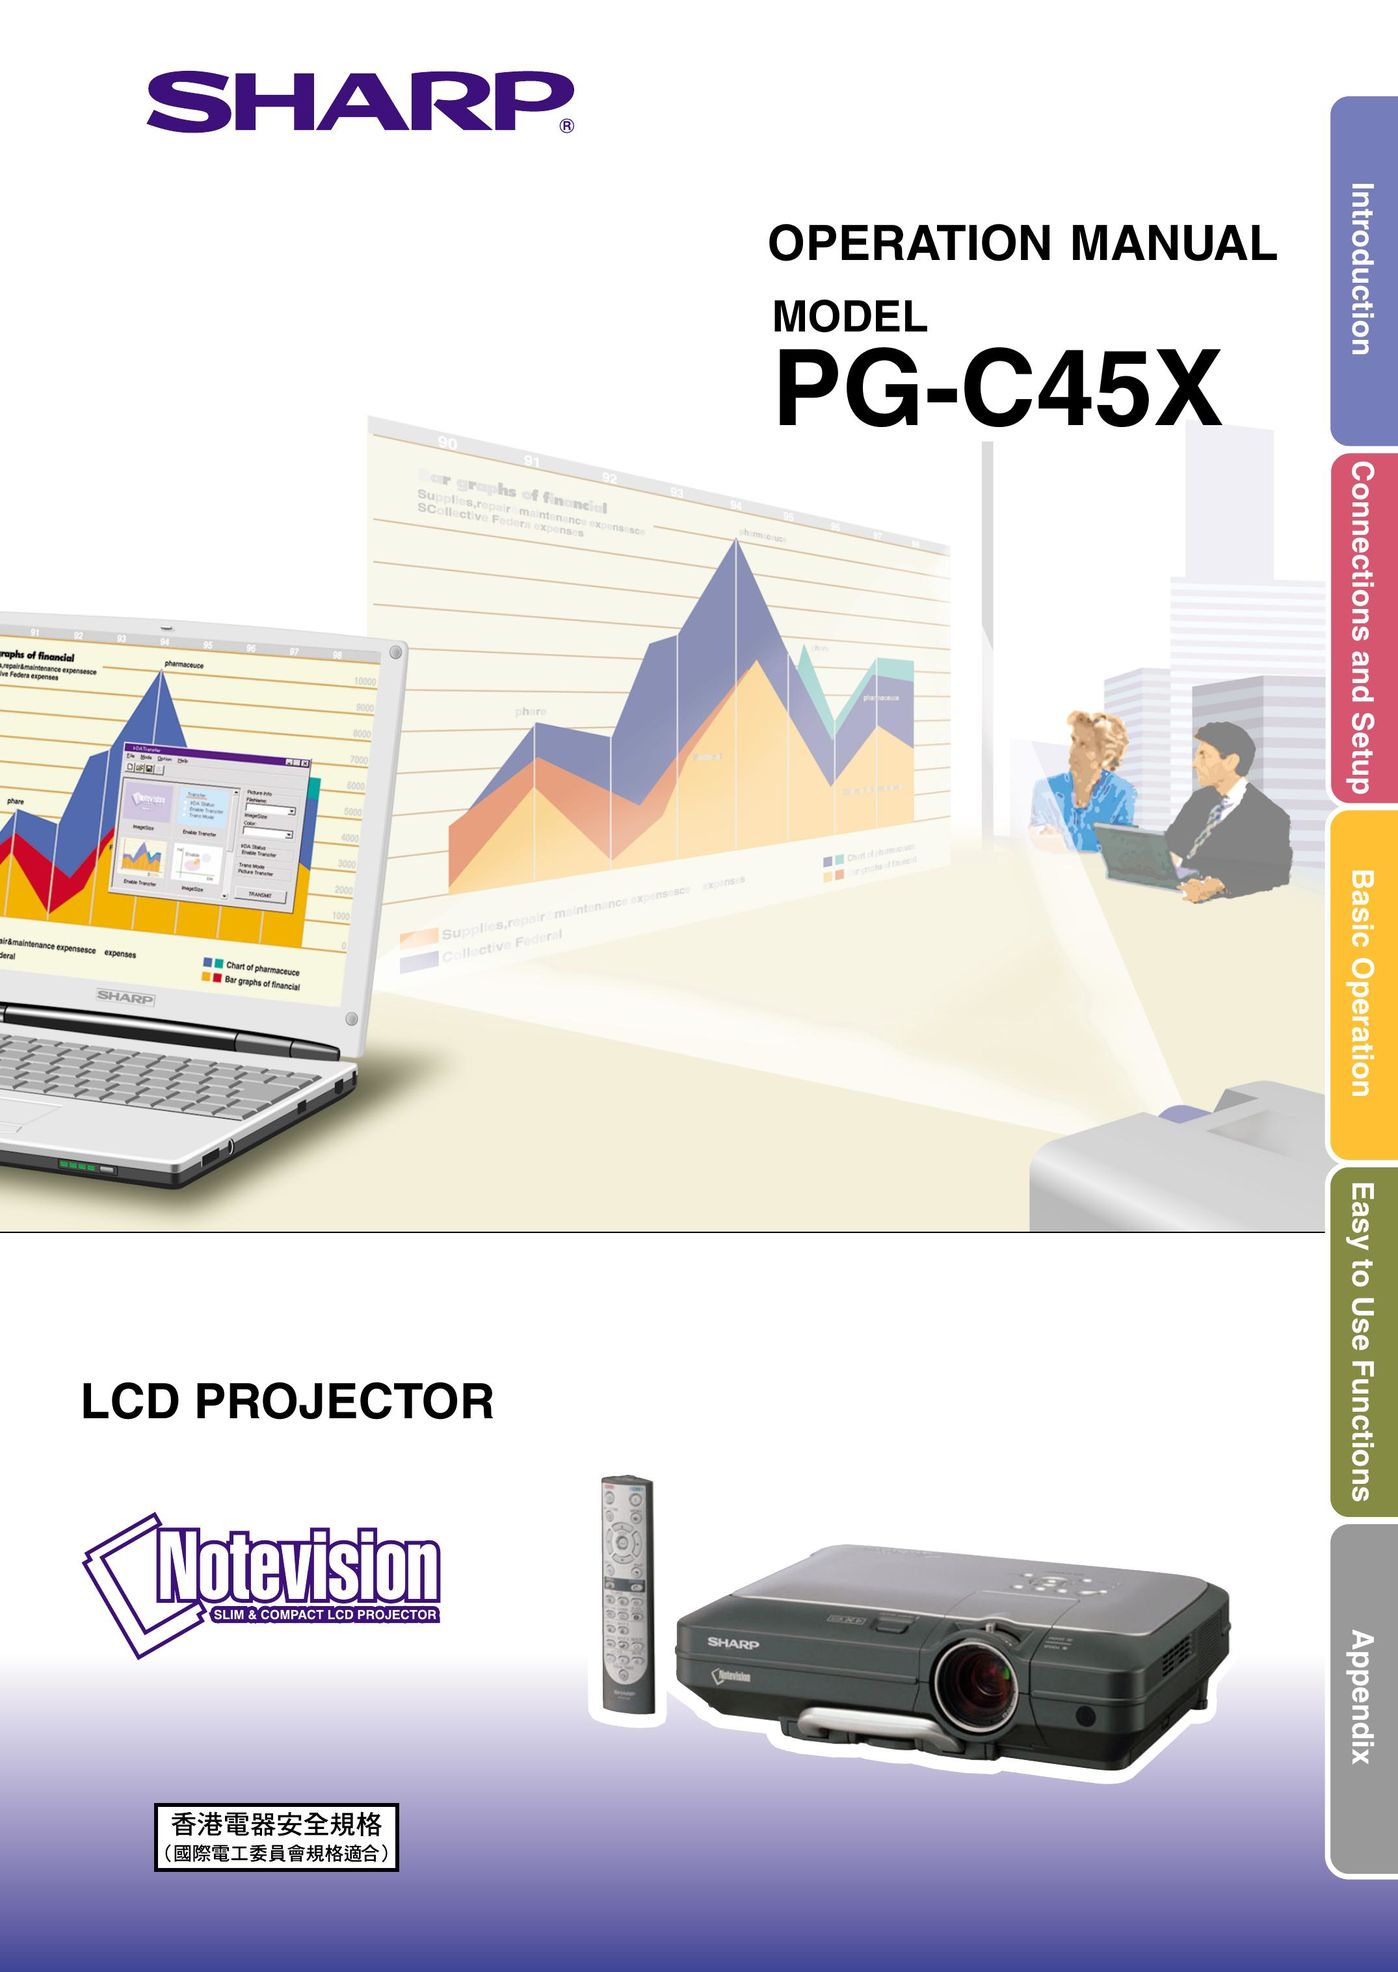 Sharp PG-C45X Projector User Manual